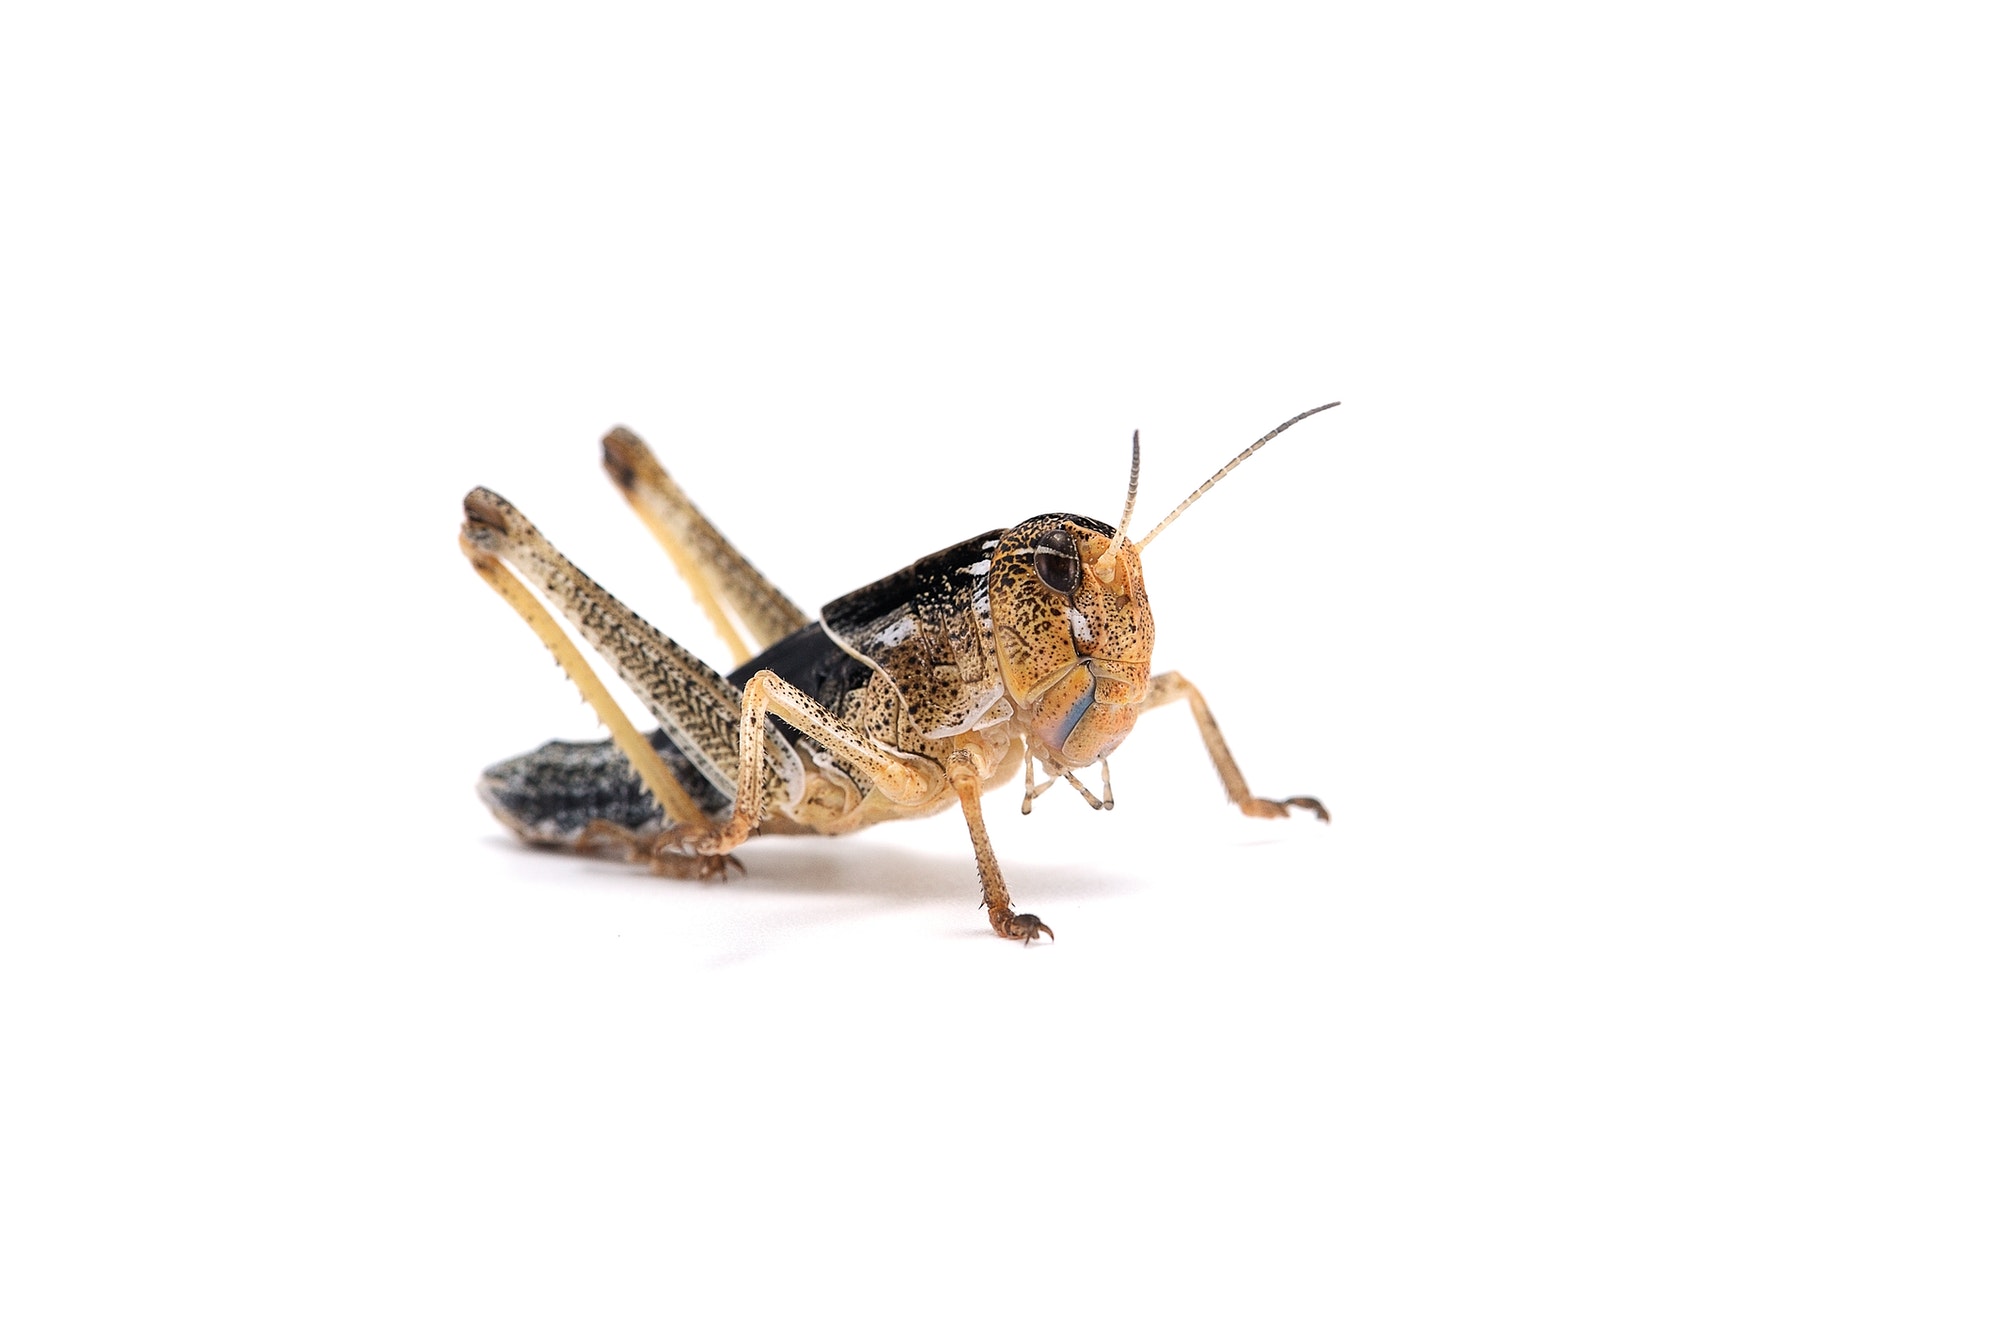 Locust isolated on white background